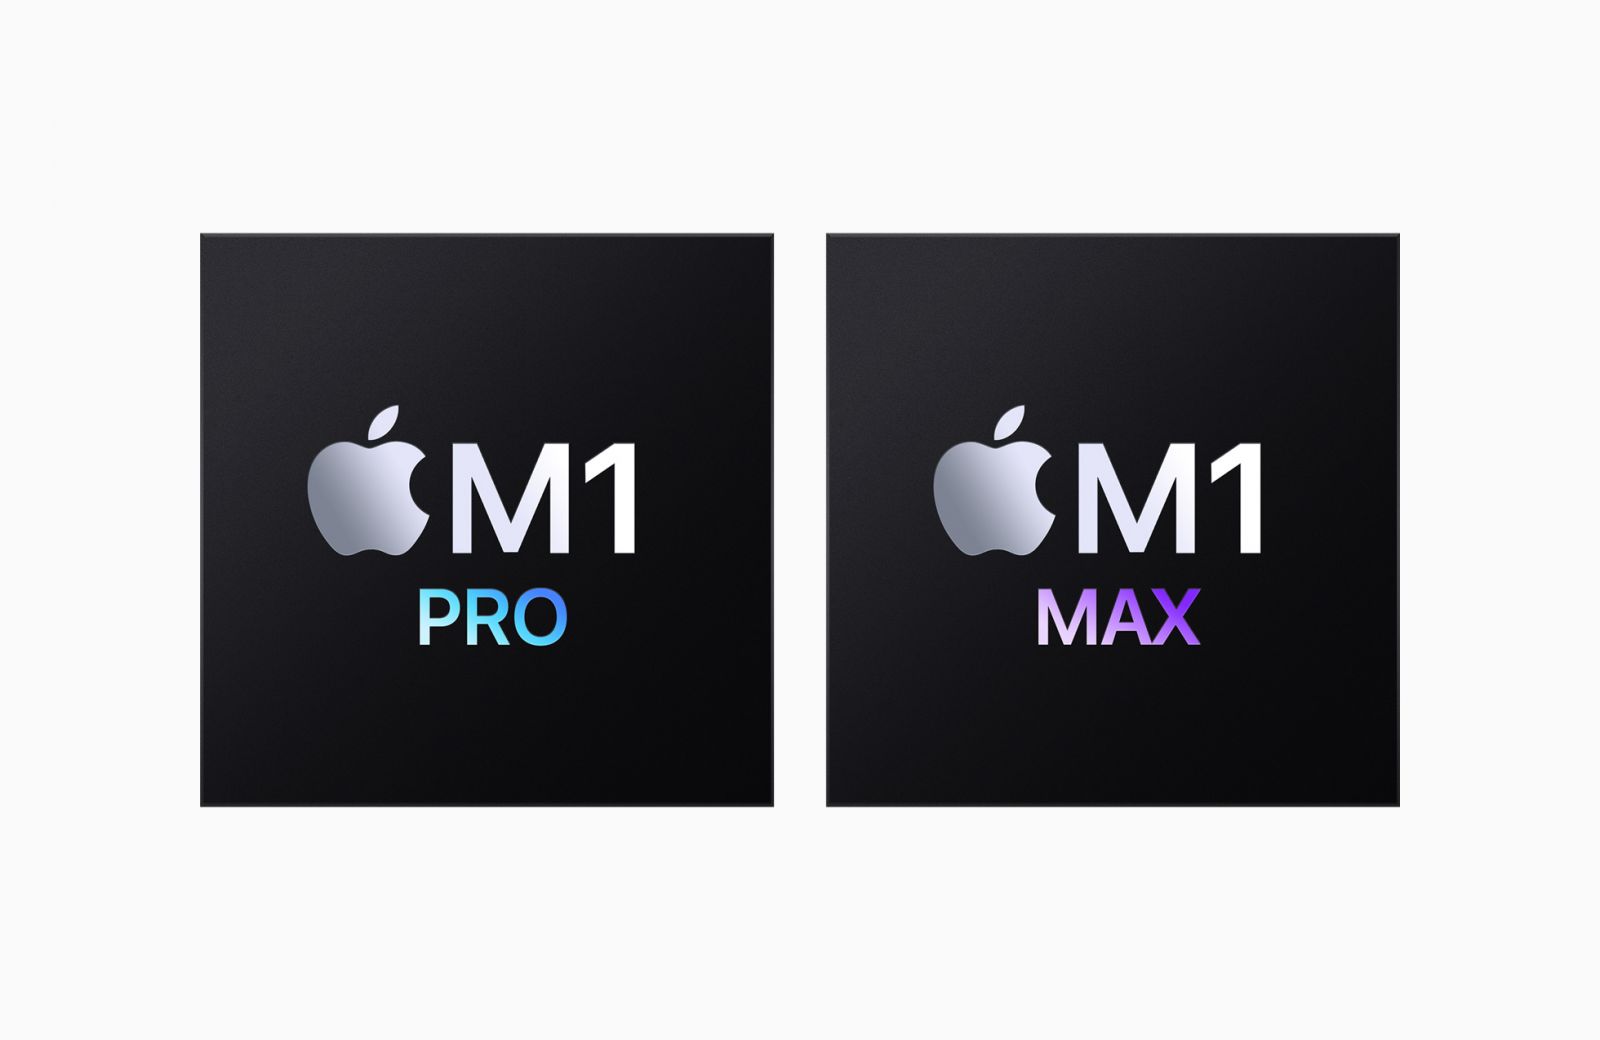 Apple_M1-Pro-M1-Max_Chips_10182021.jpg